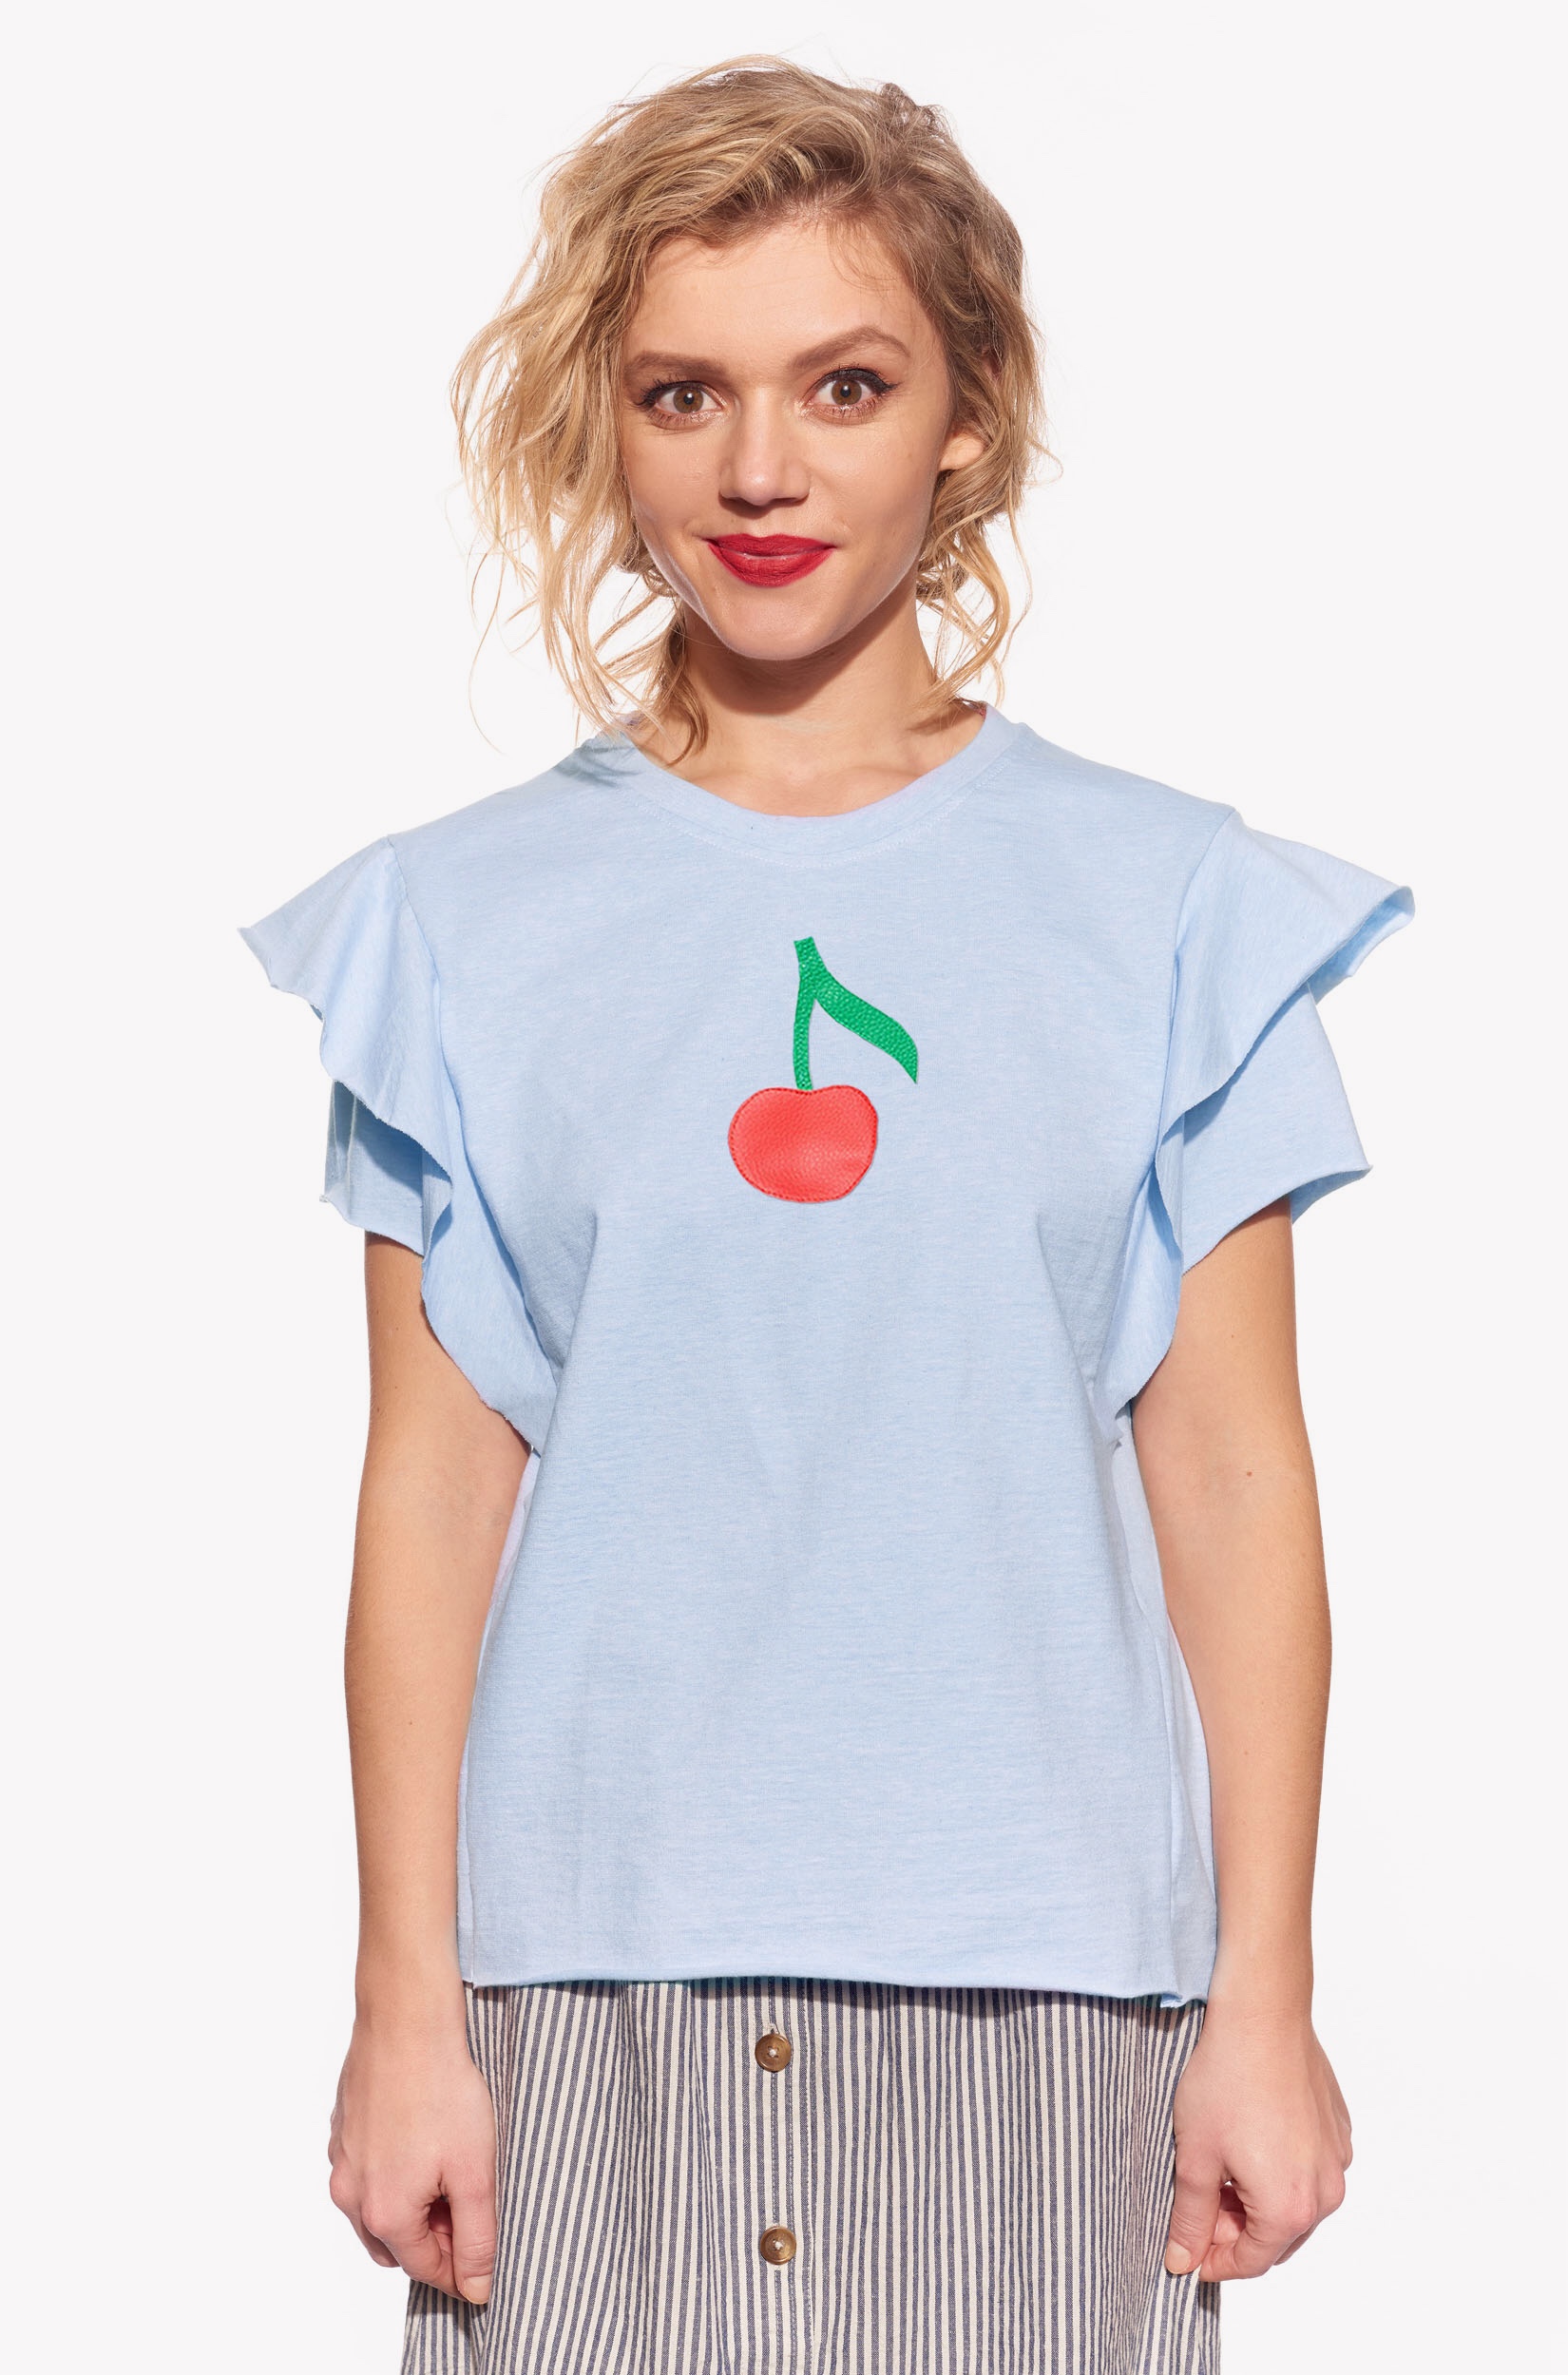 Shirt with cherry